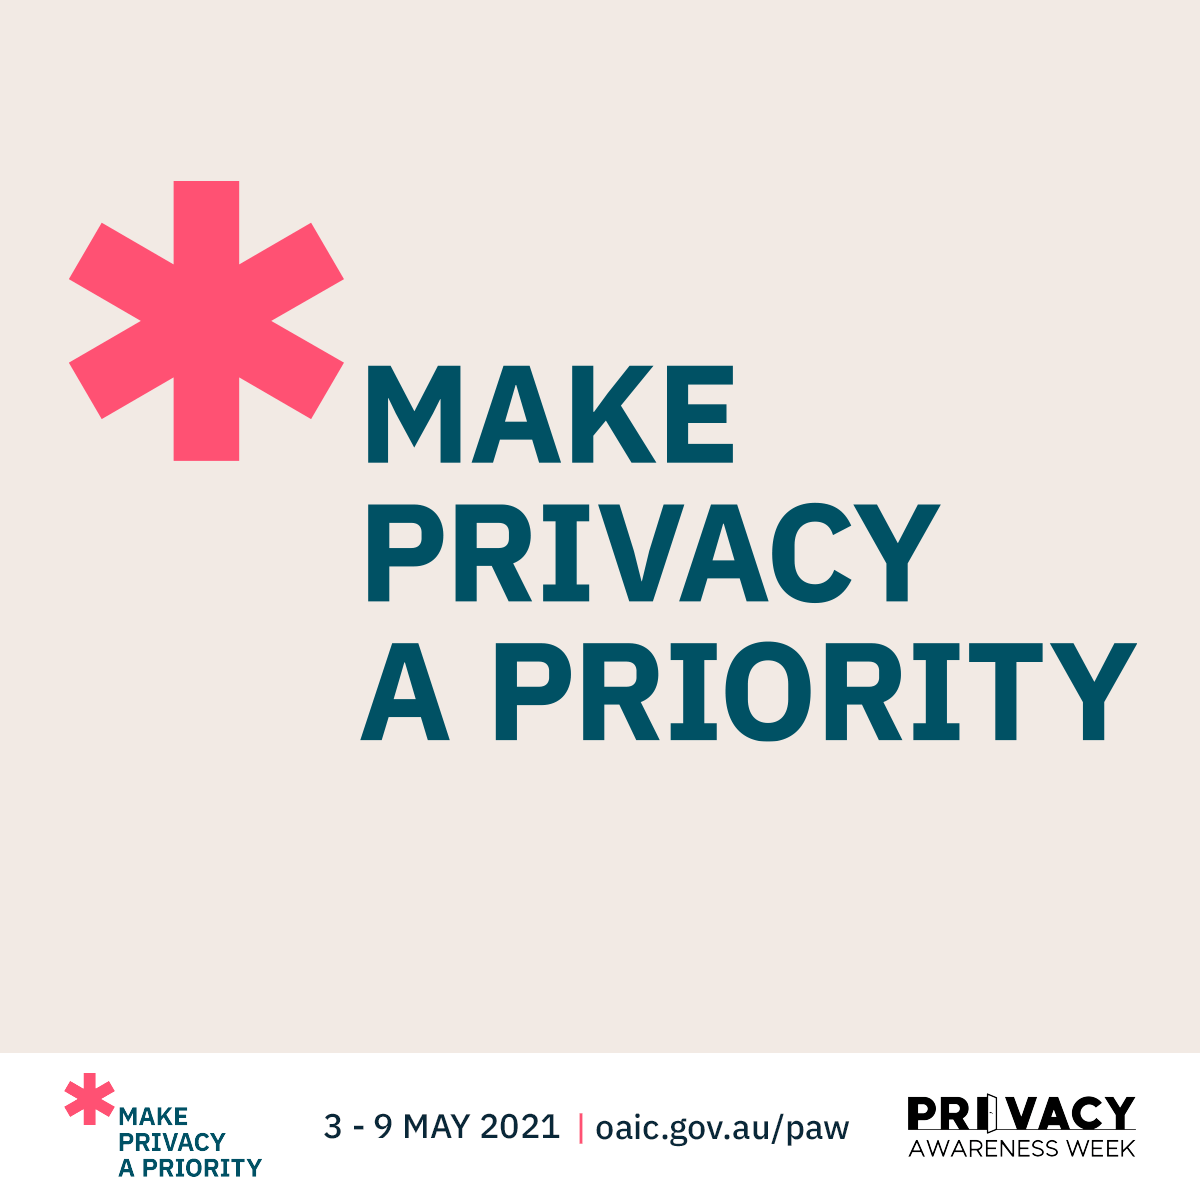 Privacy Awareness Week, May 3-9 in Australia